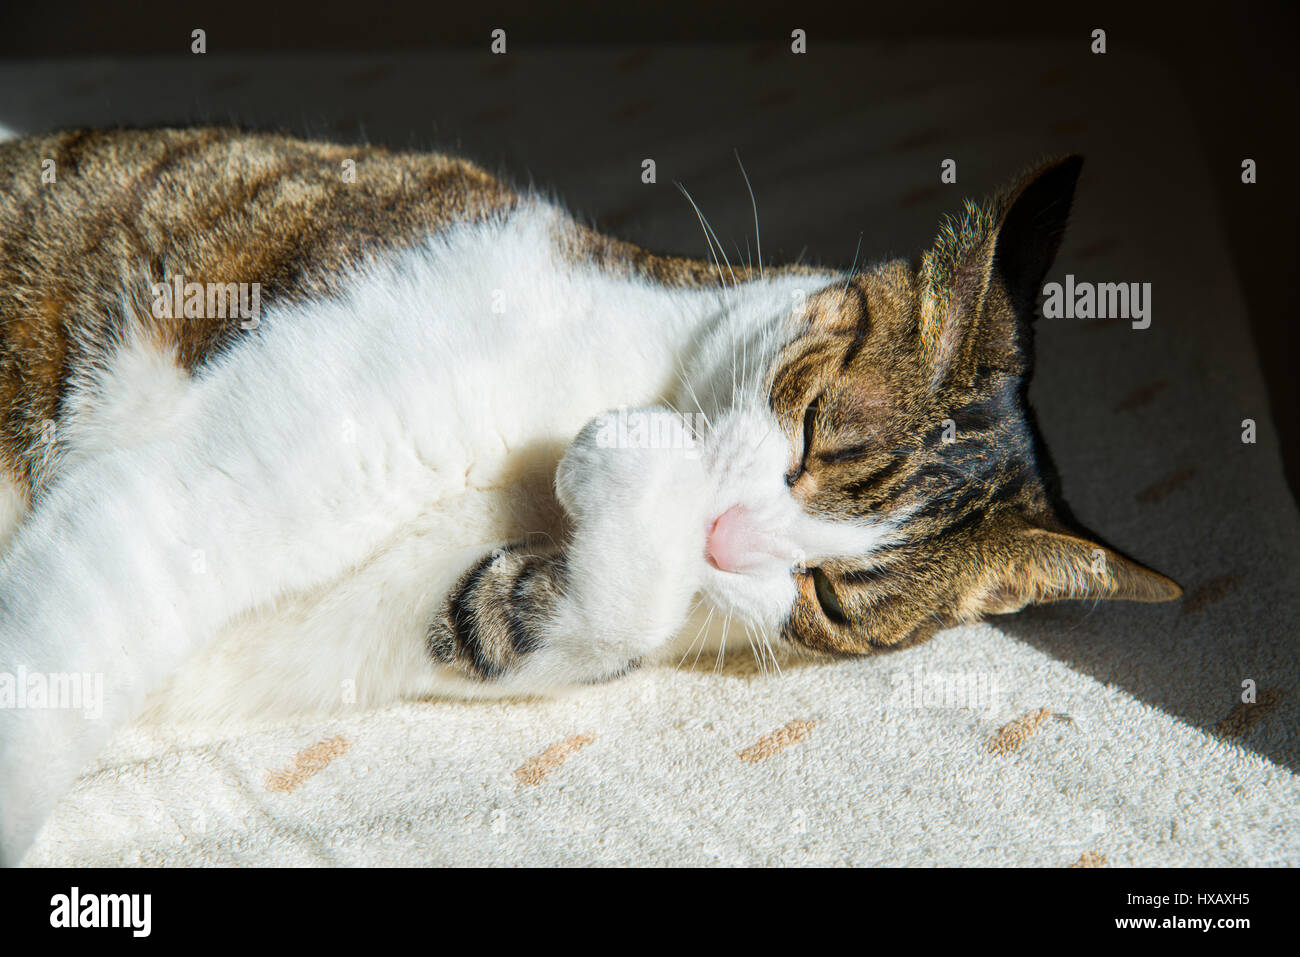 Tabby and white cat sunbathing and washing himself. Stock Photo